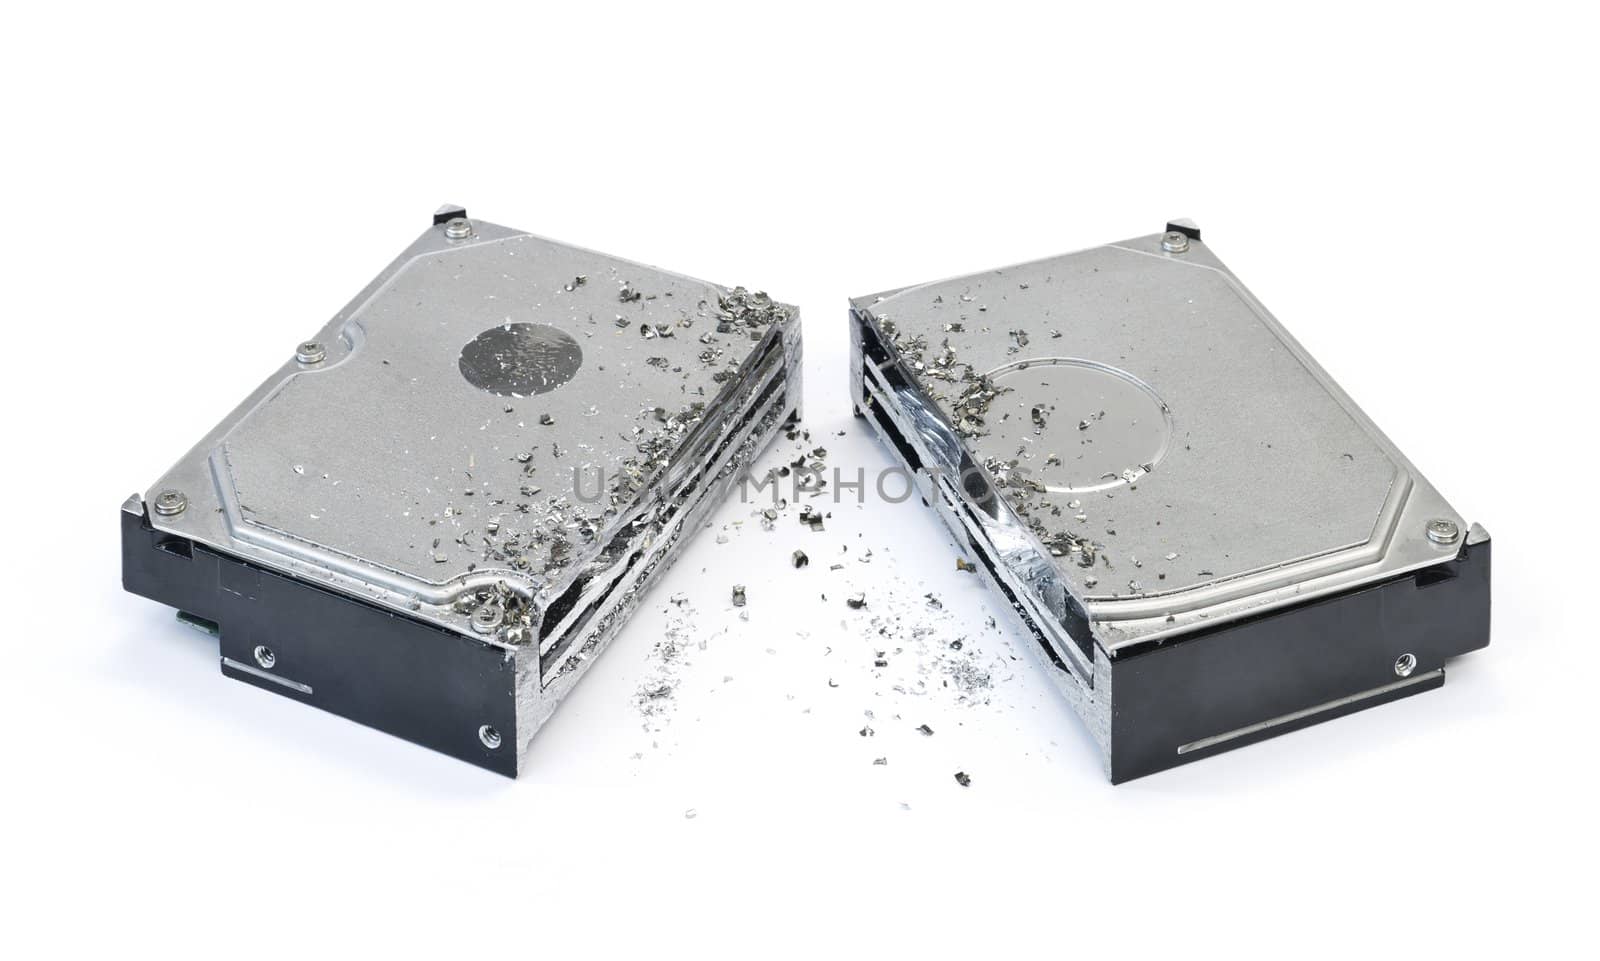 halved hard disk drive by gewoldi